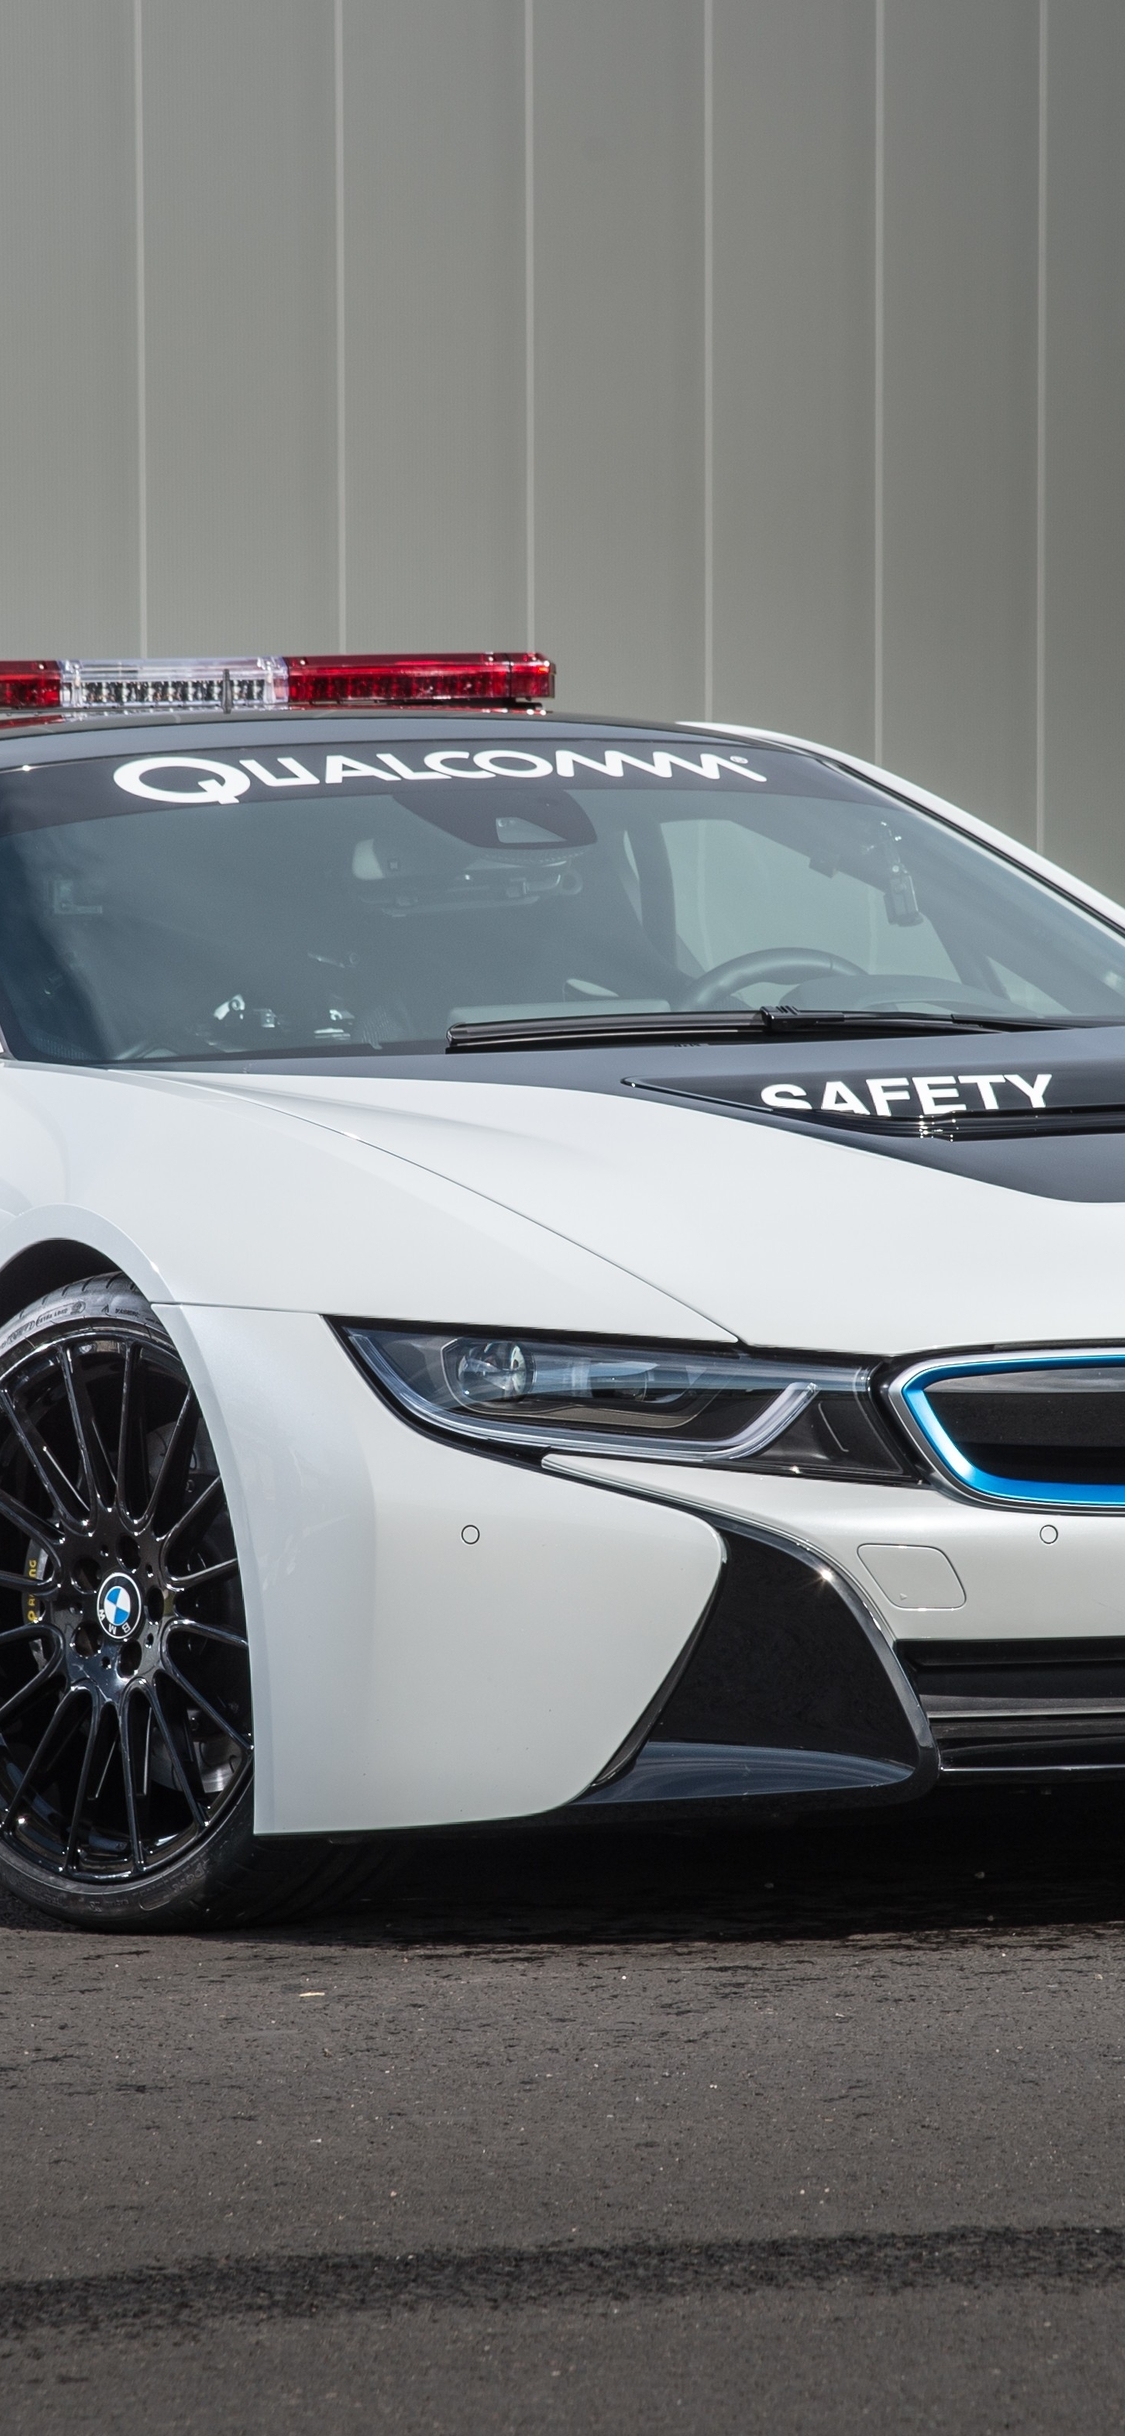 Картинка: BMW, i8, safety car, белый, суперкар, электромобиль, мигалка, асфальт